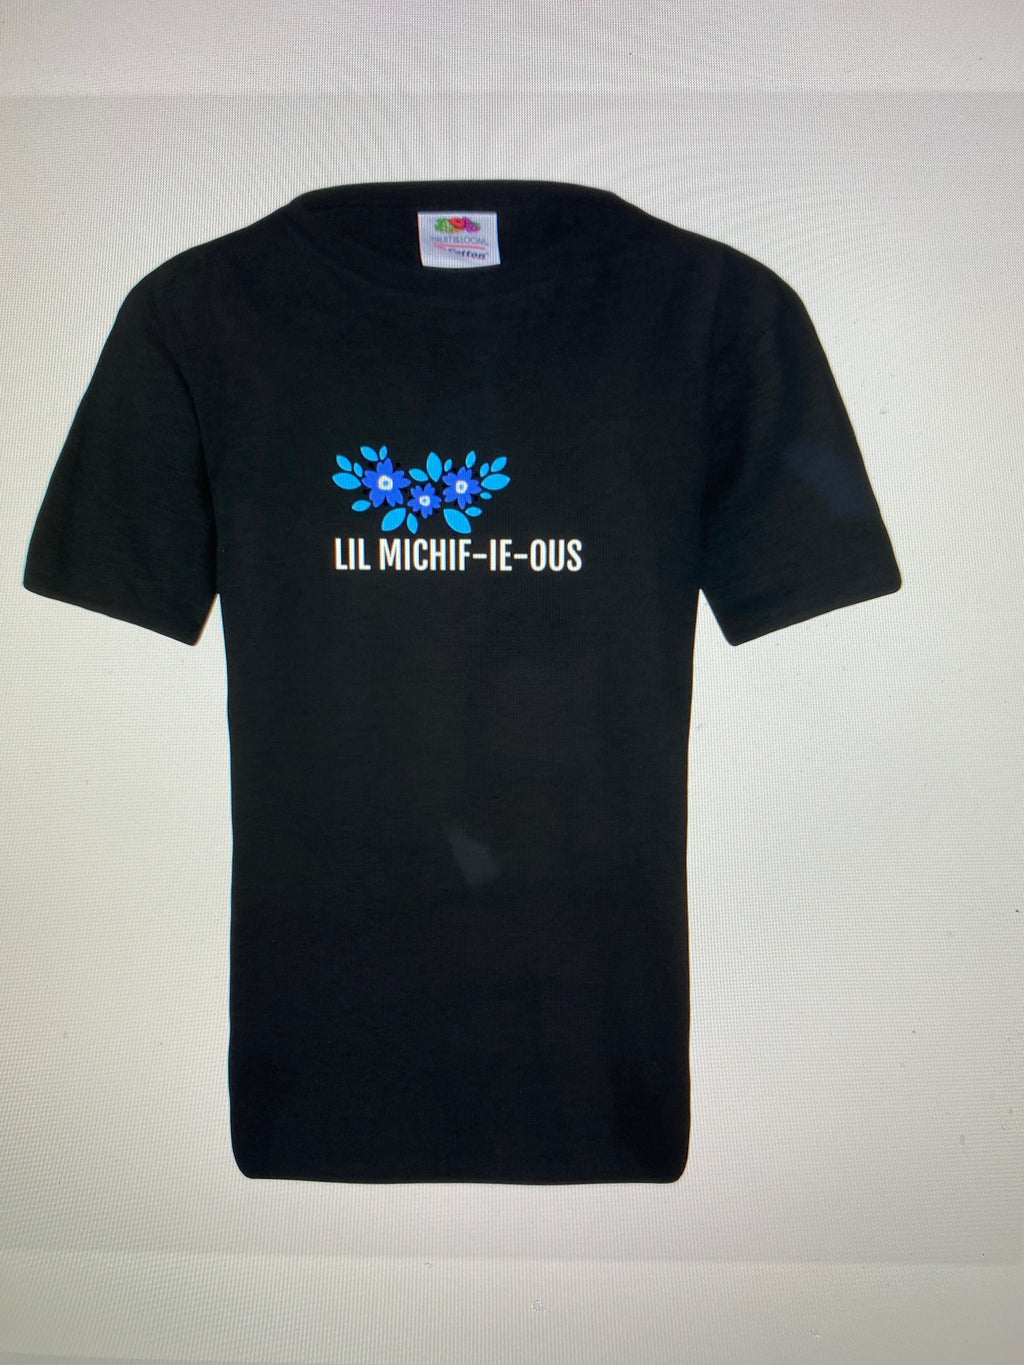 Lil Michif-ie-ous Children’s shirt